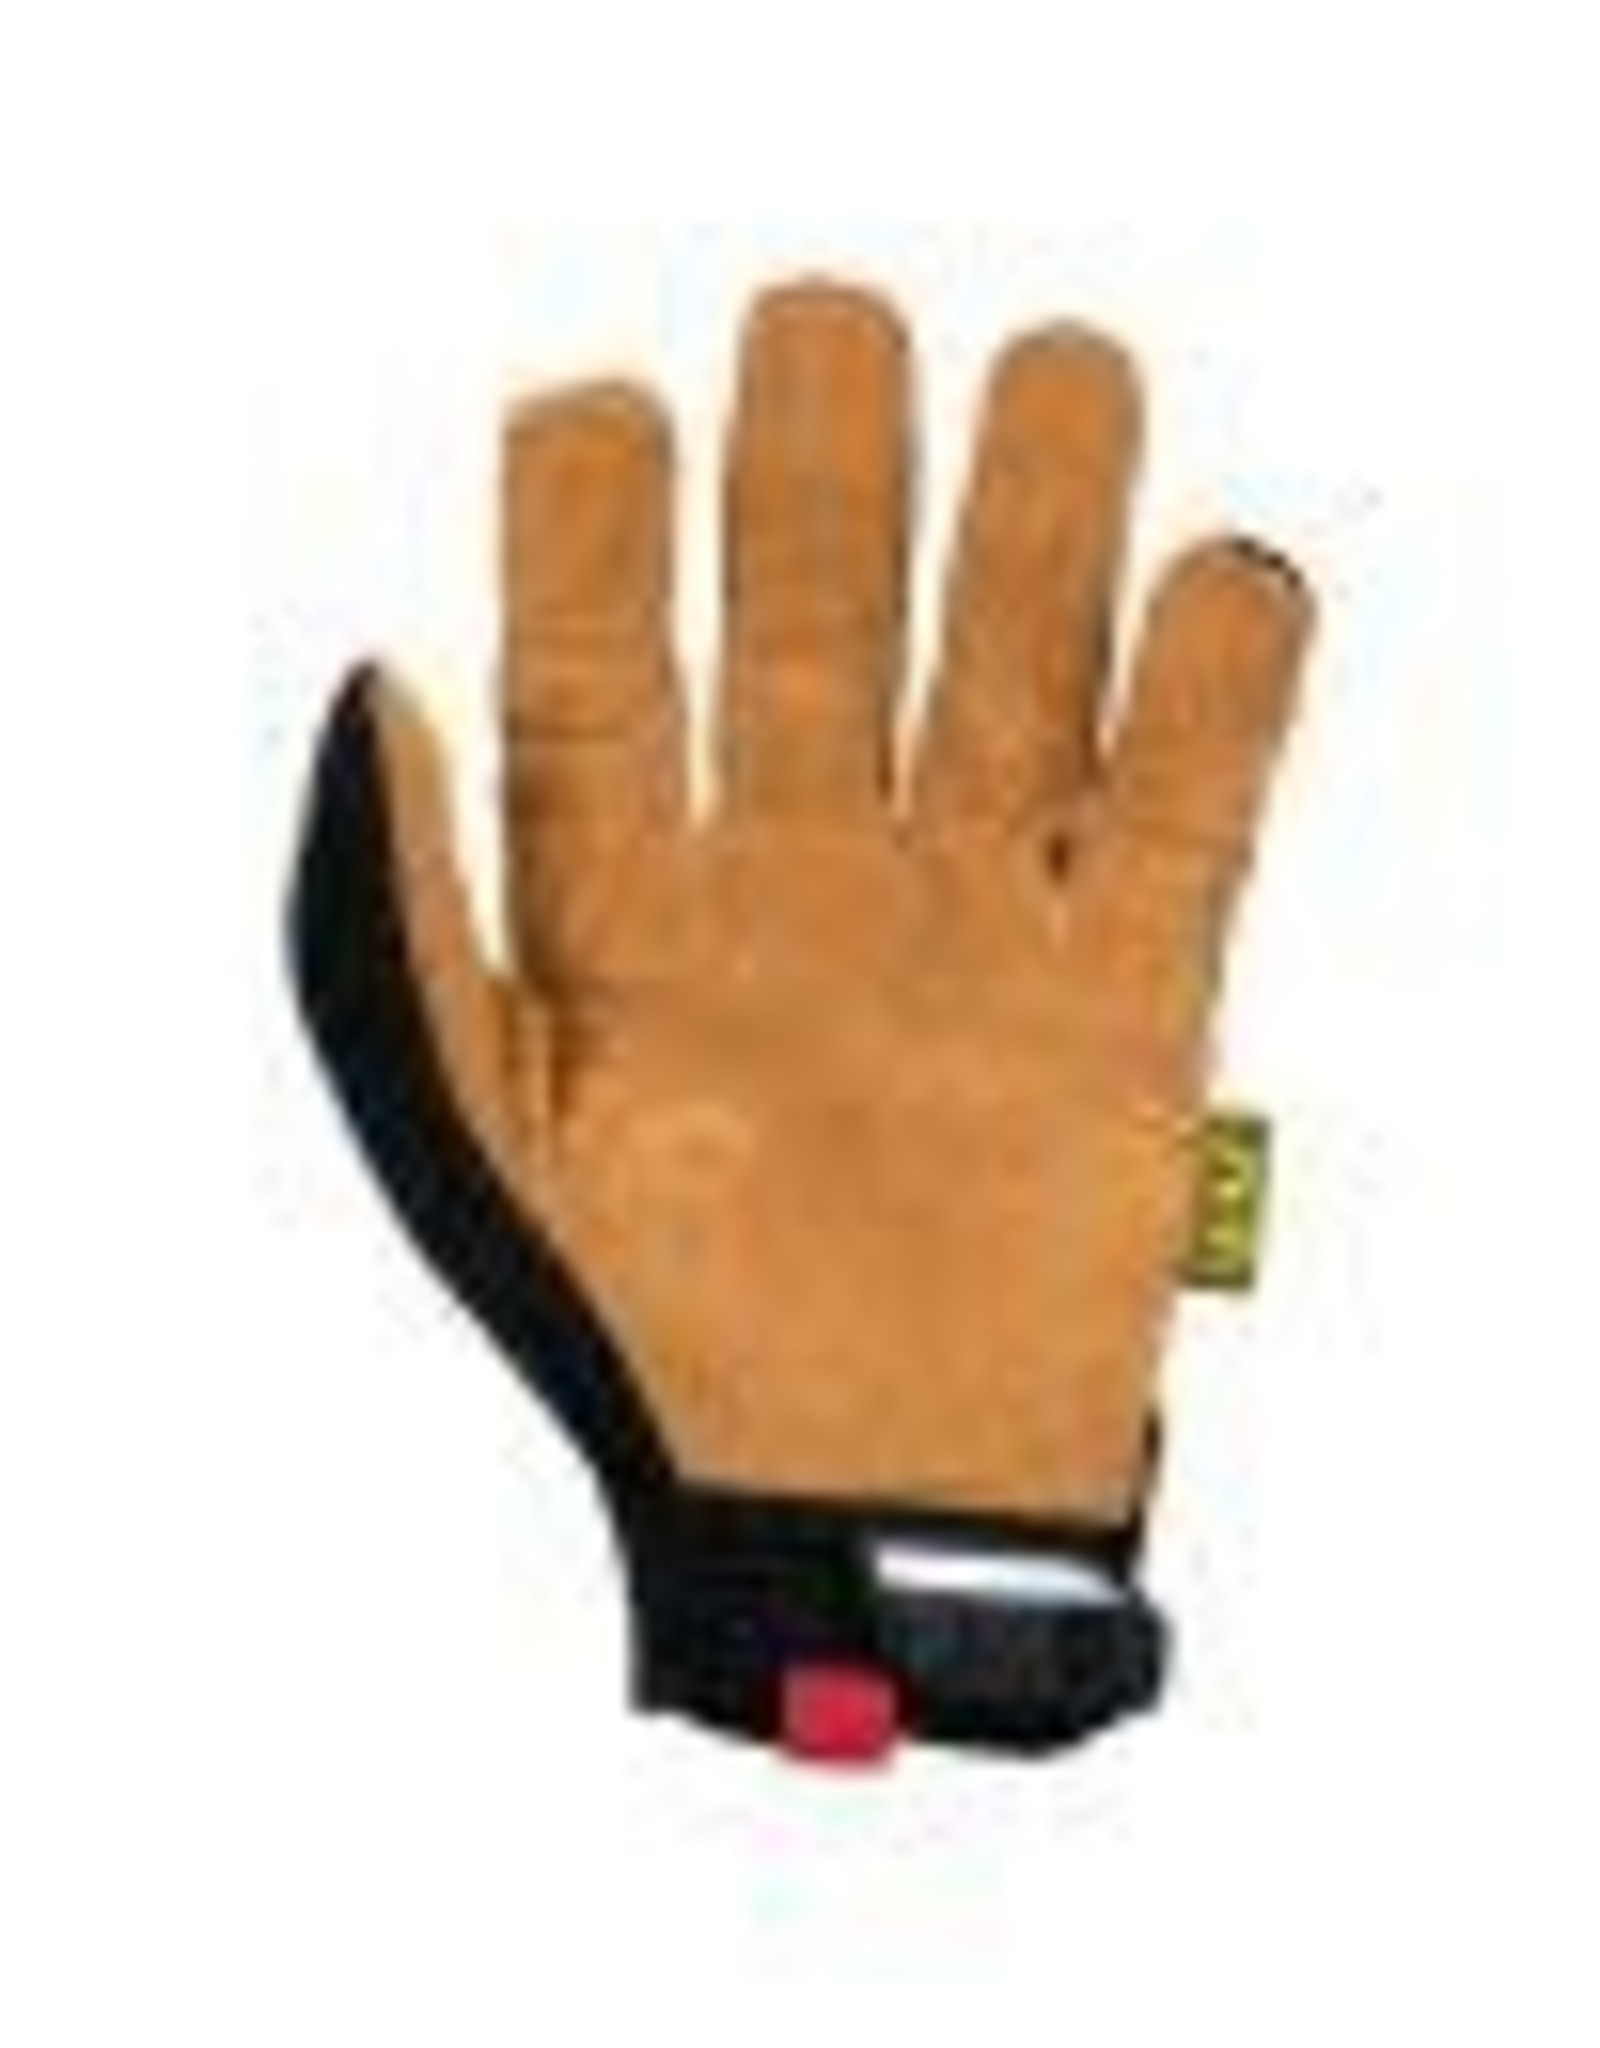 Mechanix Mechanix Leather M-pact Gloves